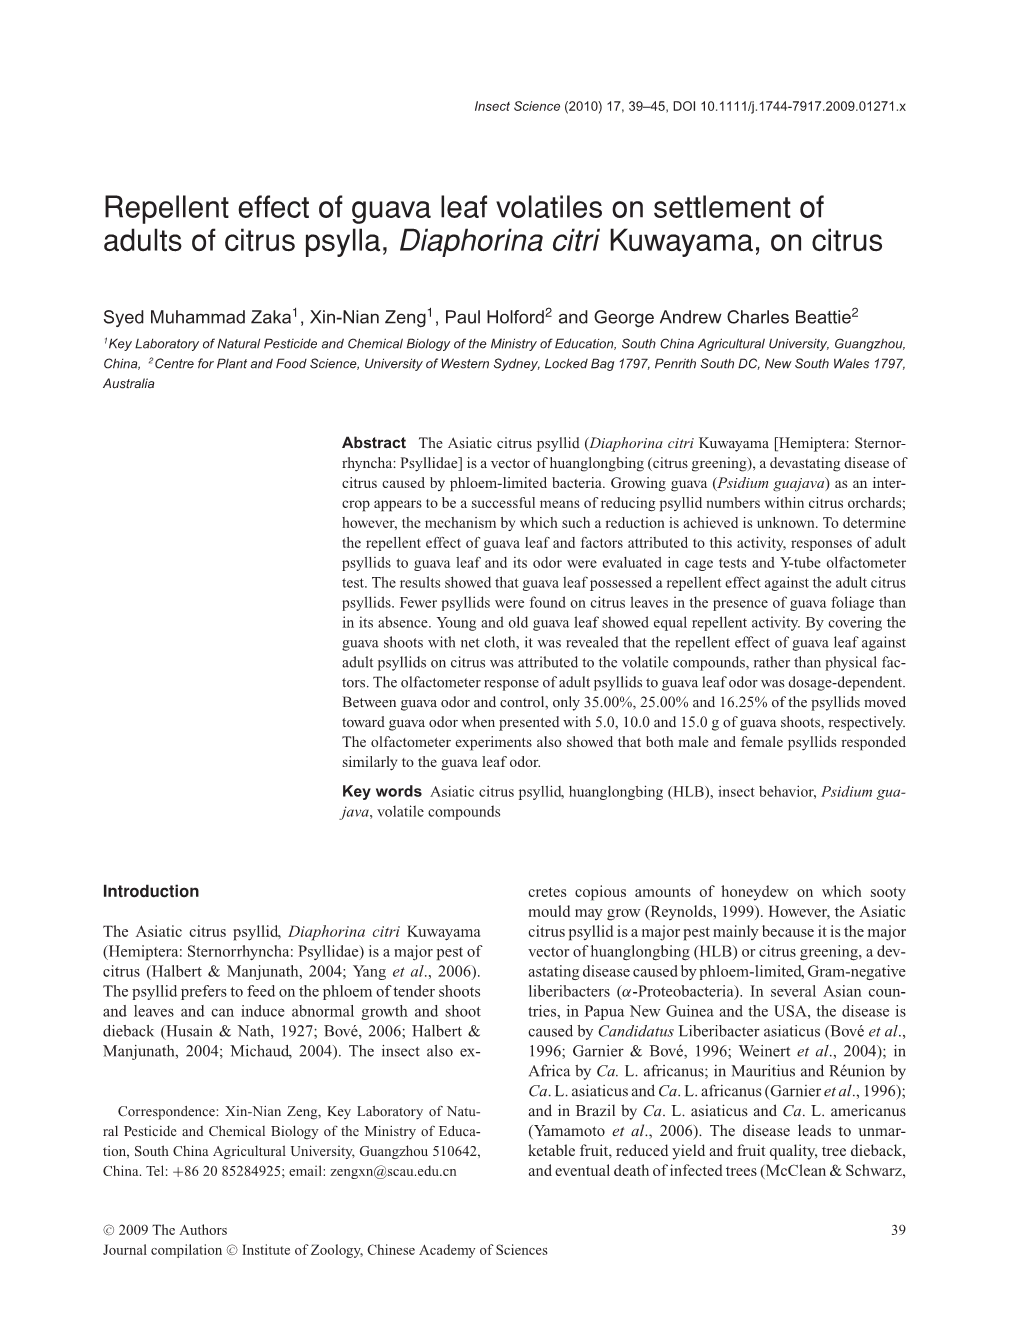 Repellent Effect of Guava Leaf Volatiles on Settlement of Adults of Citrus Psylla, Diaphorina Citri Kuwayama, on Citrus